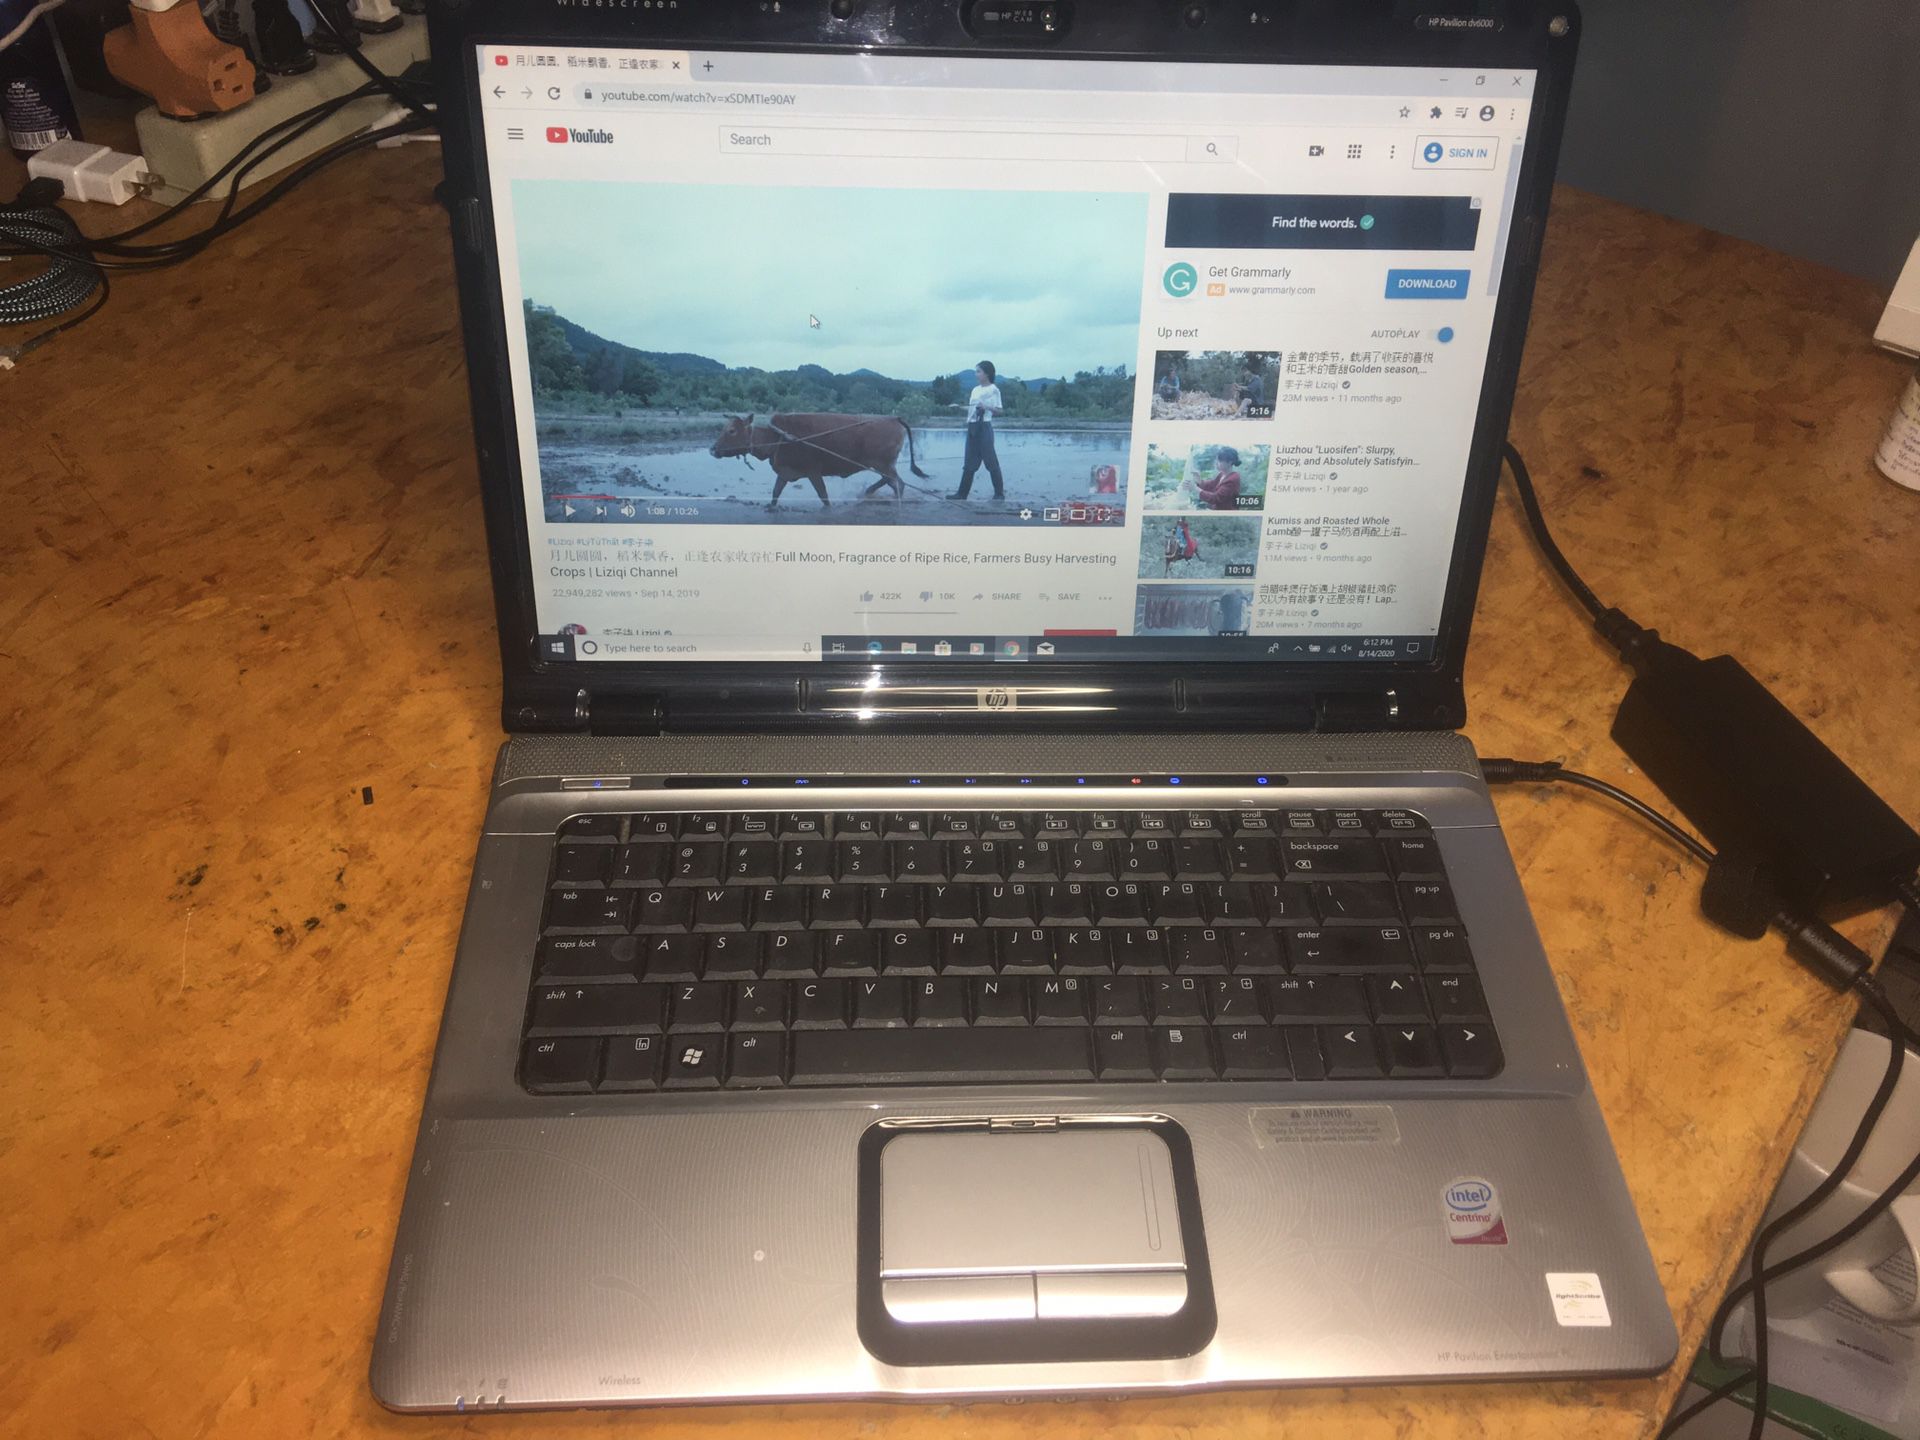 HP Pavilion dv6000 laptop $140